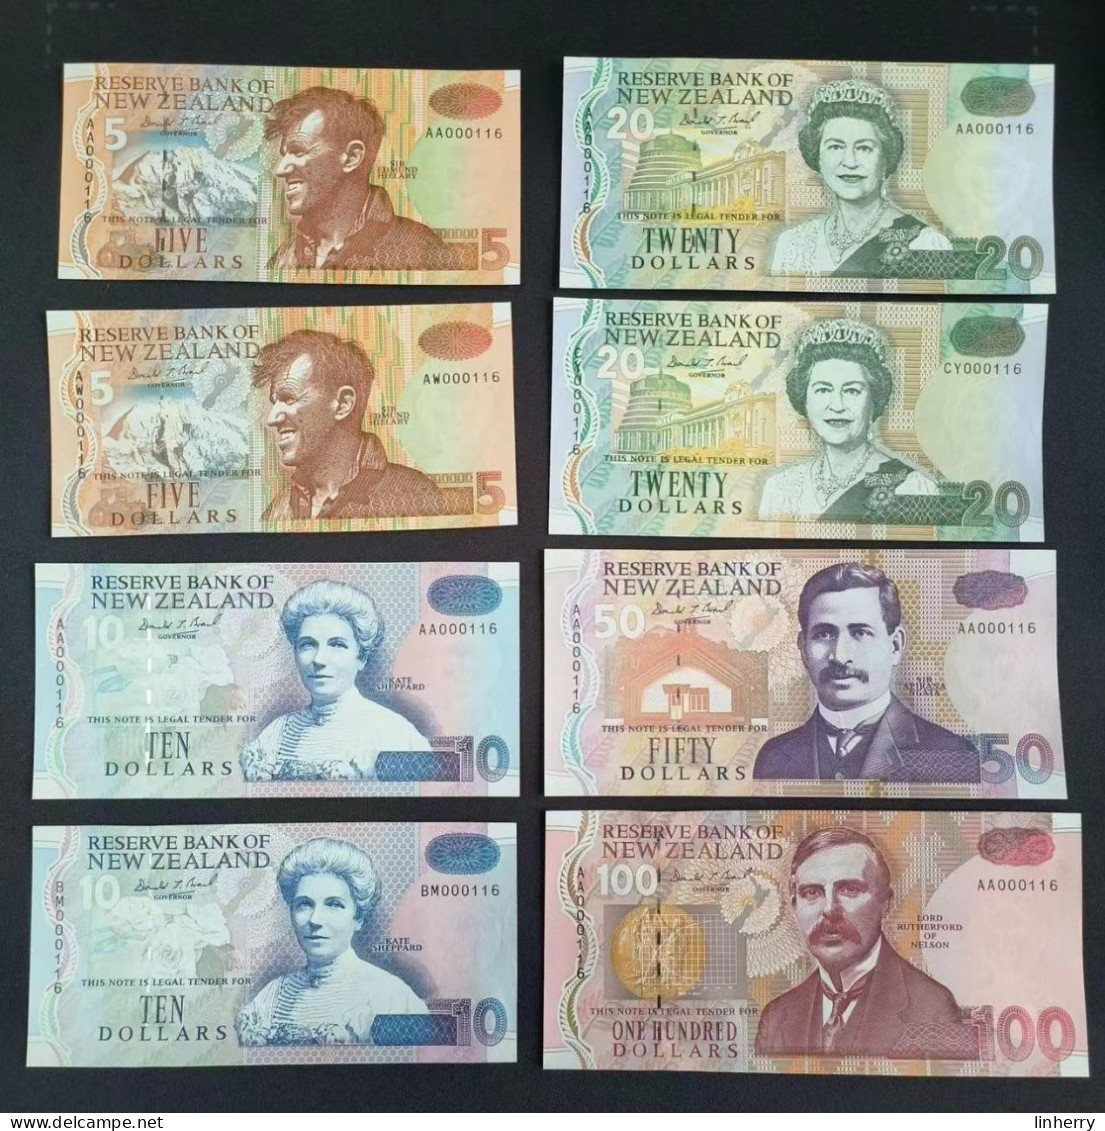 New Zealand 5-100 Dollars, 1992, 8 Pcs Notes Matching Serial Number ,UNC - Neuseeland